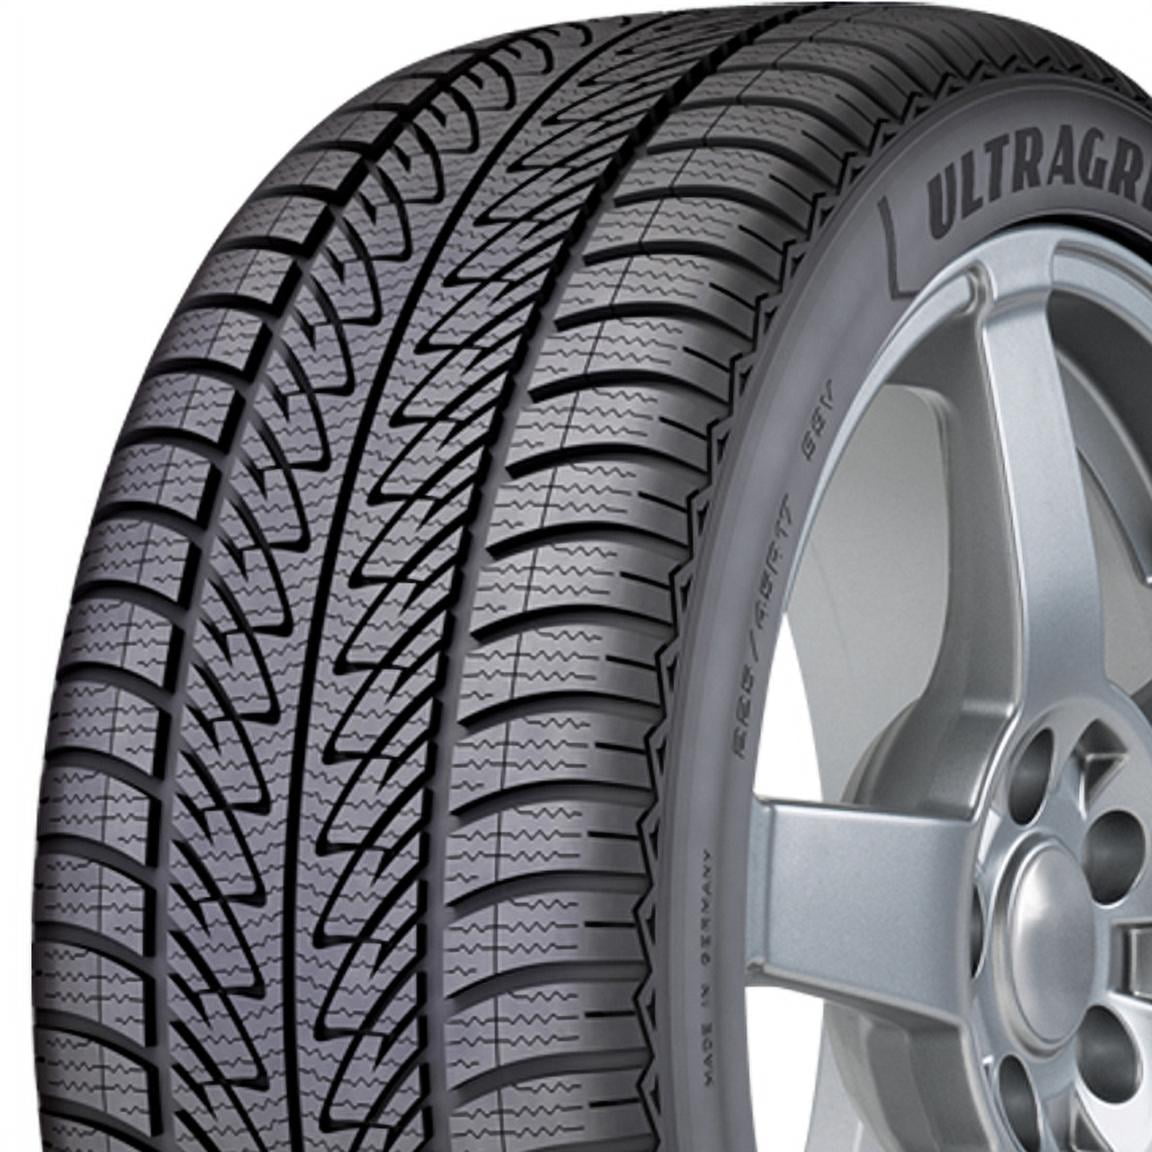 Goodyear ultra grip 8 performance SL winter 2012 Fits: Nissan Versa 2003-06 P195/55R16 bsw tire Sentra 1.8 SE-R, 87H Nissan